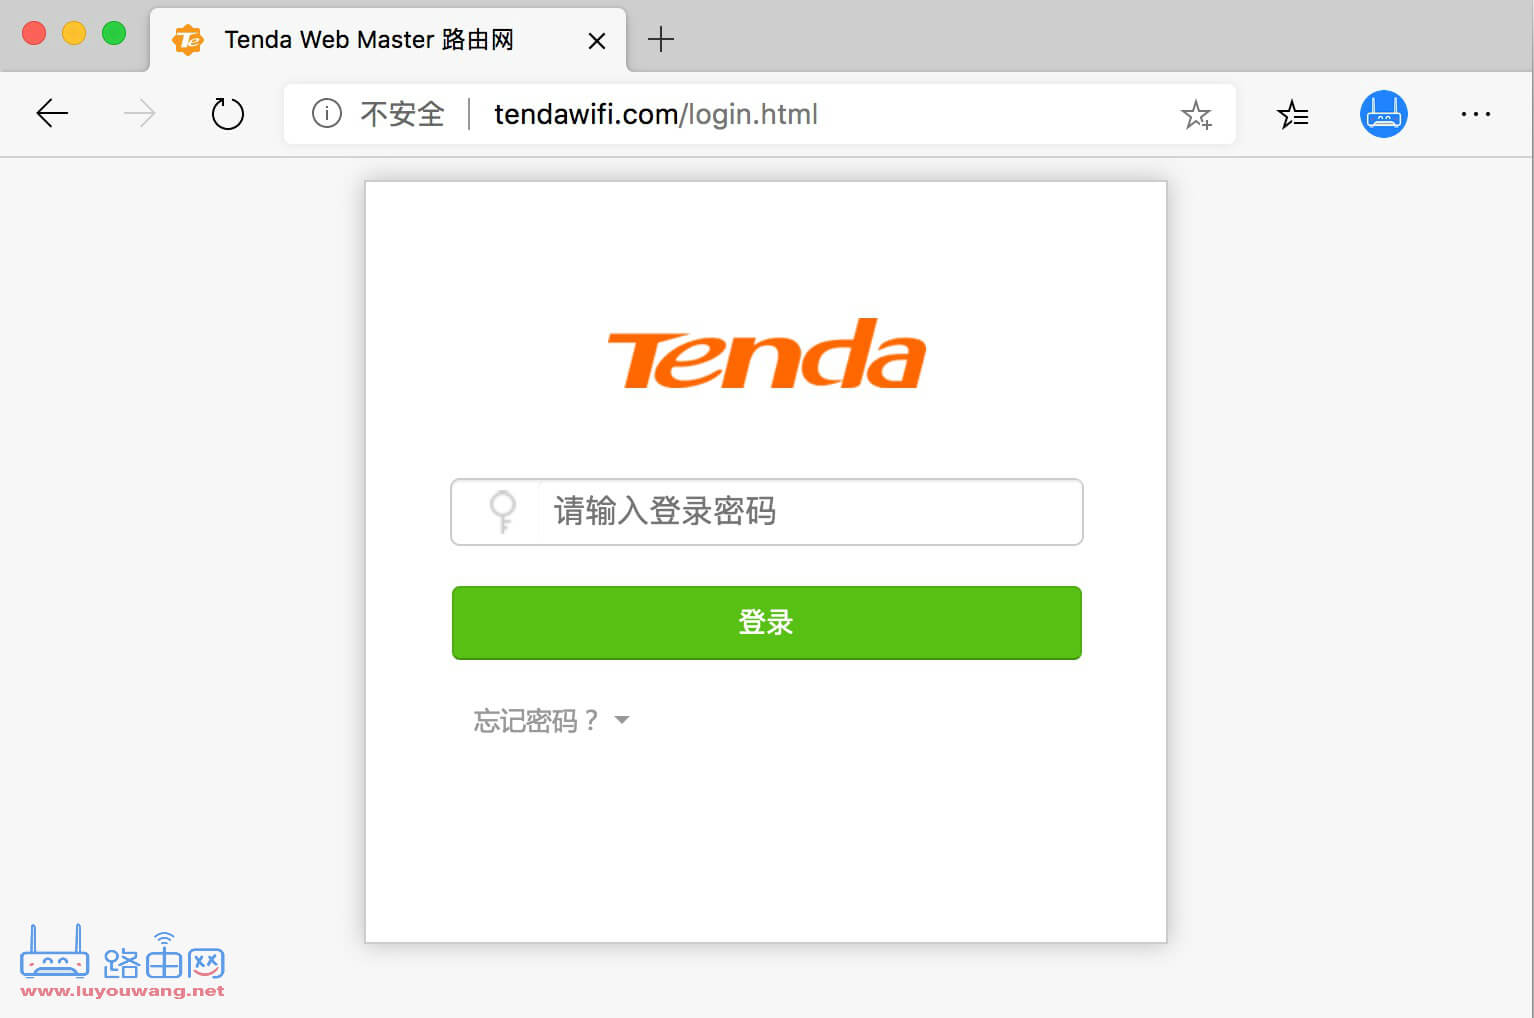 Tendawifi.com 腾达(Tenda)无线路由器登录网址